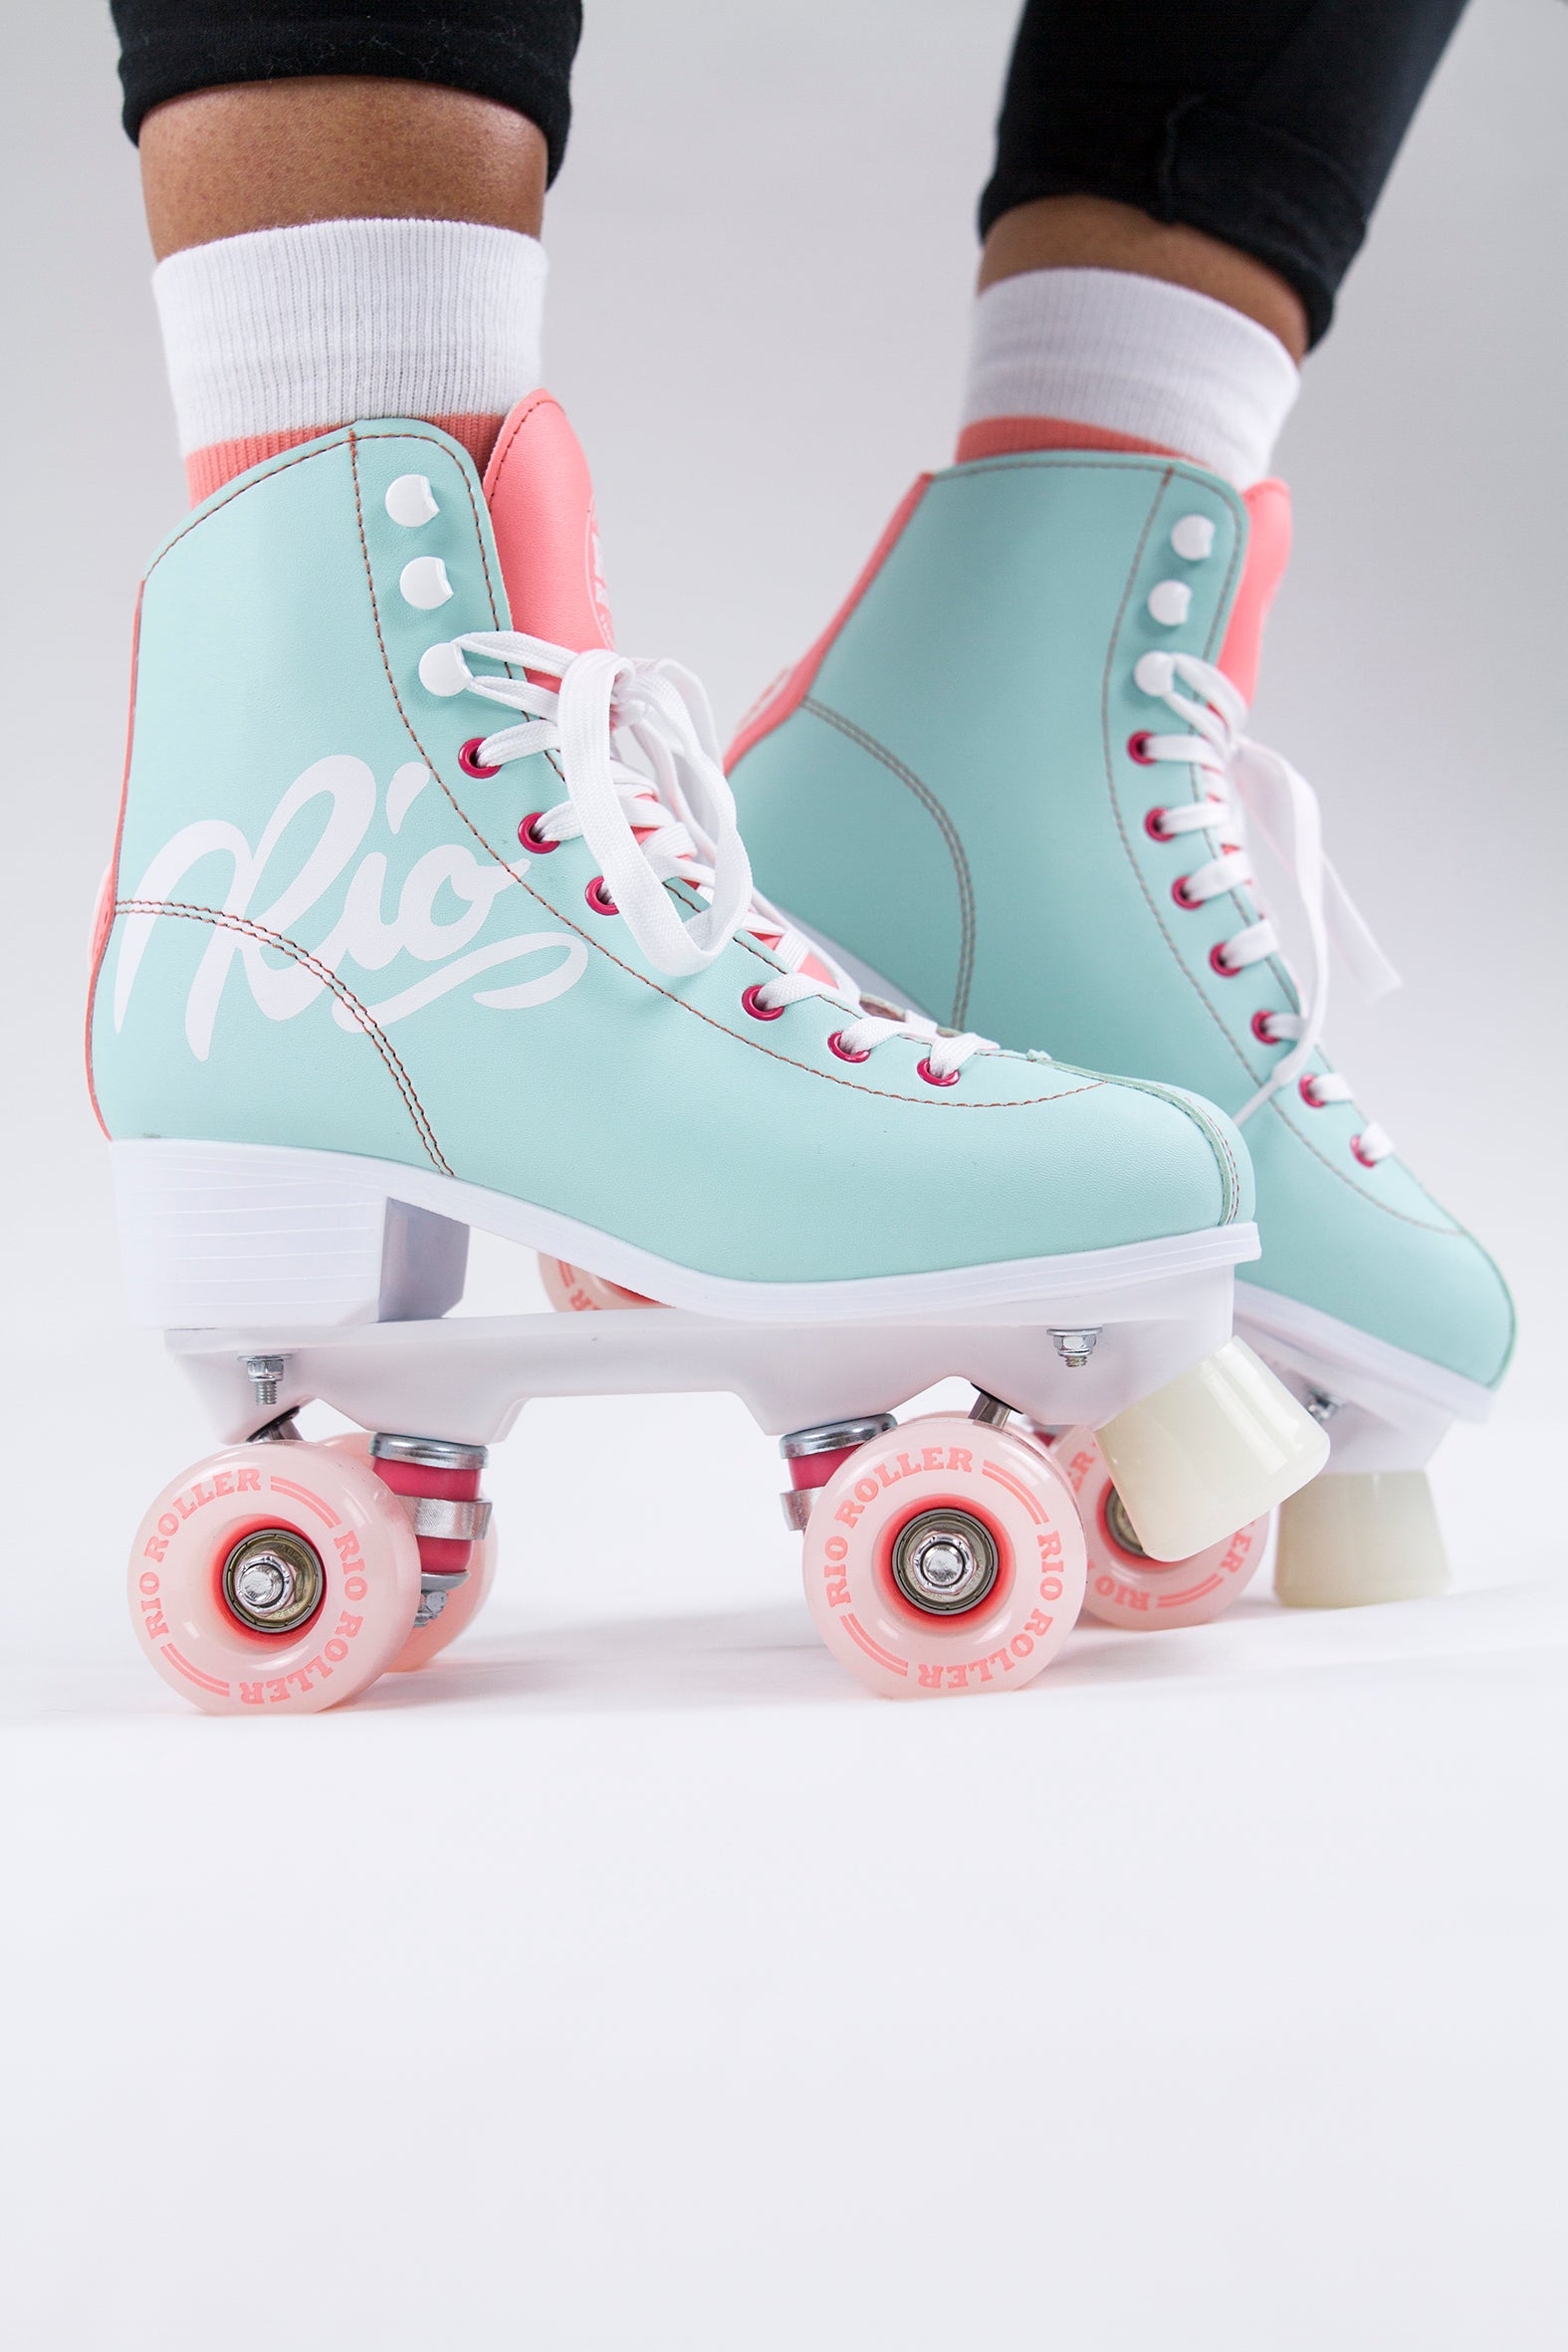 Rio Roller Script Quad Roller Skates - Teal/Coral - Momma Trucker Skates